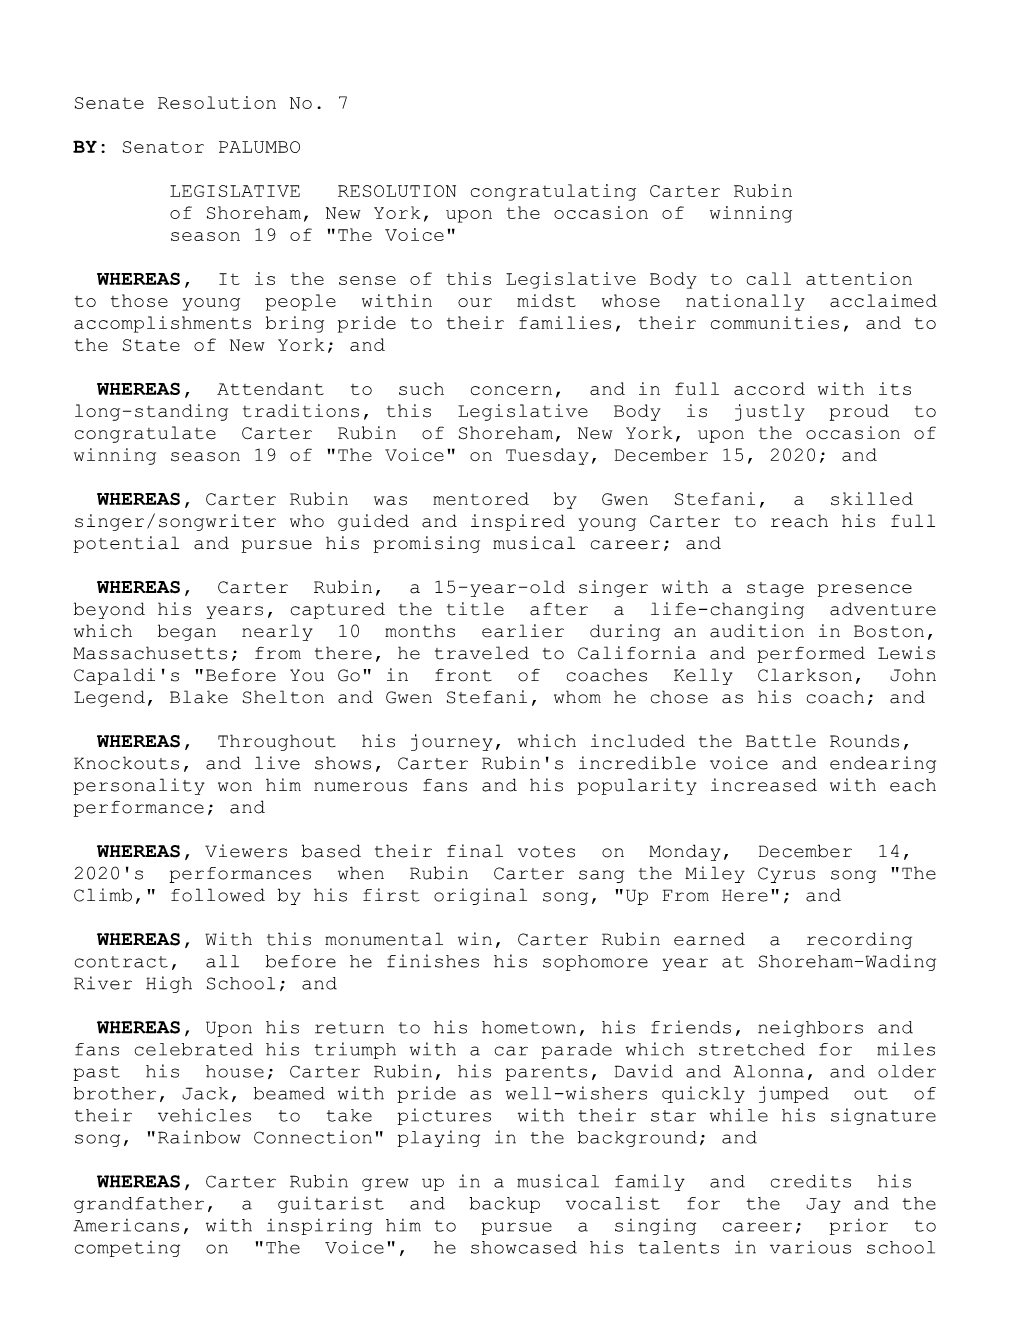 Senate Resolution No. 7 Senator PALUMBO BY: LEGISLATIVE RESOLUTION Congratulating Carter Rubin of Shoreham, New York, Upon